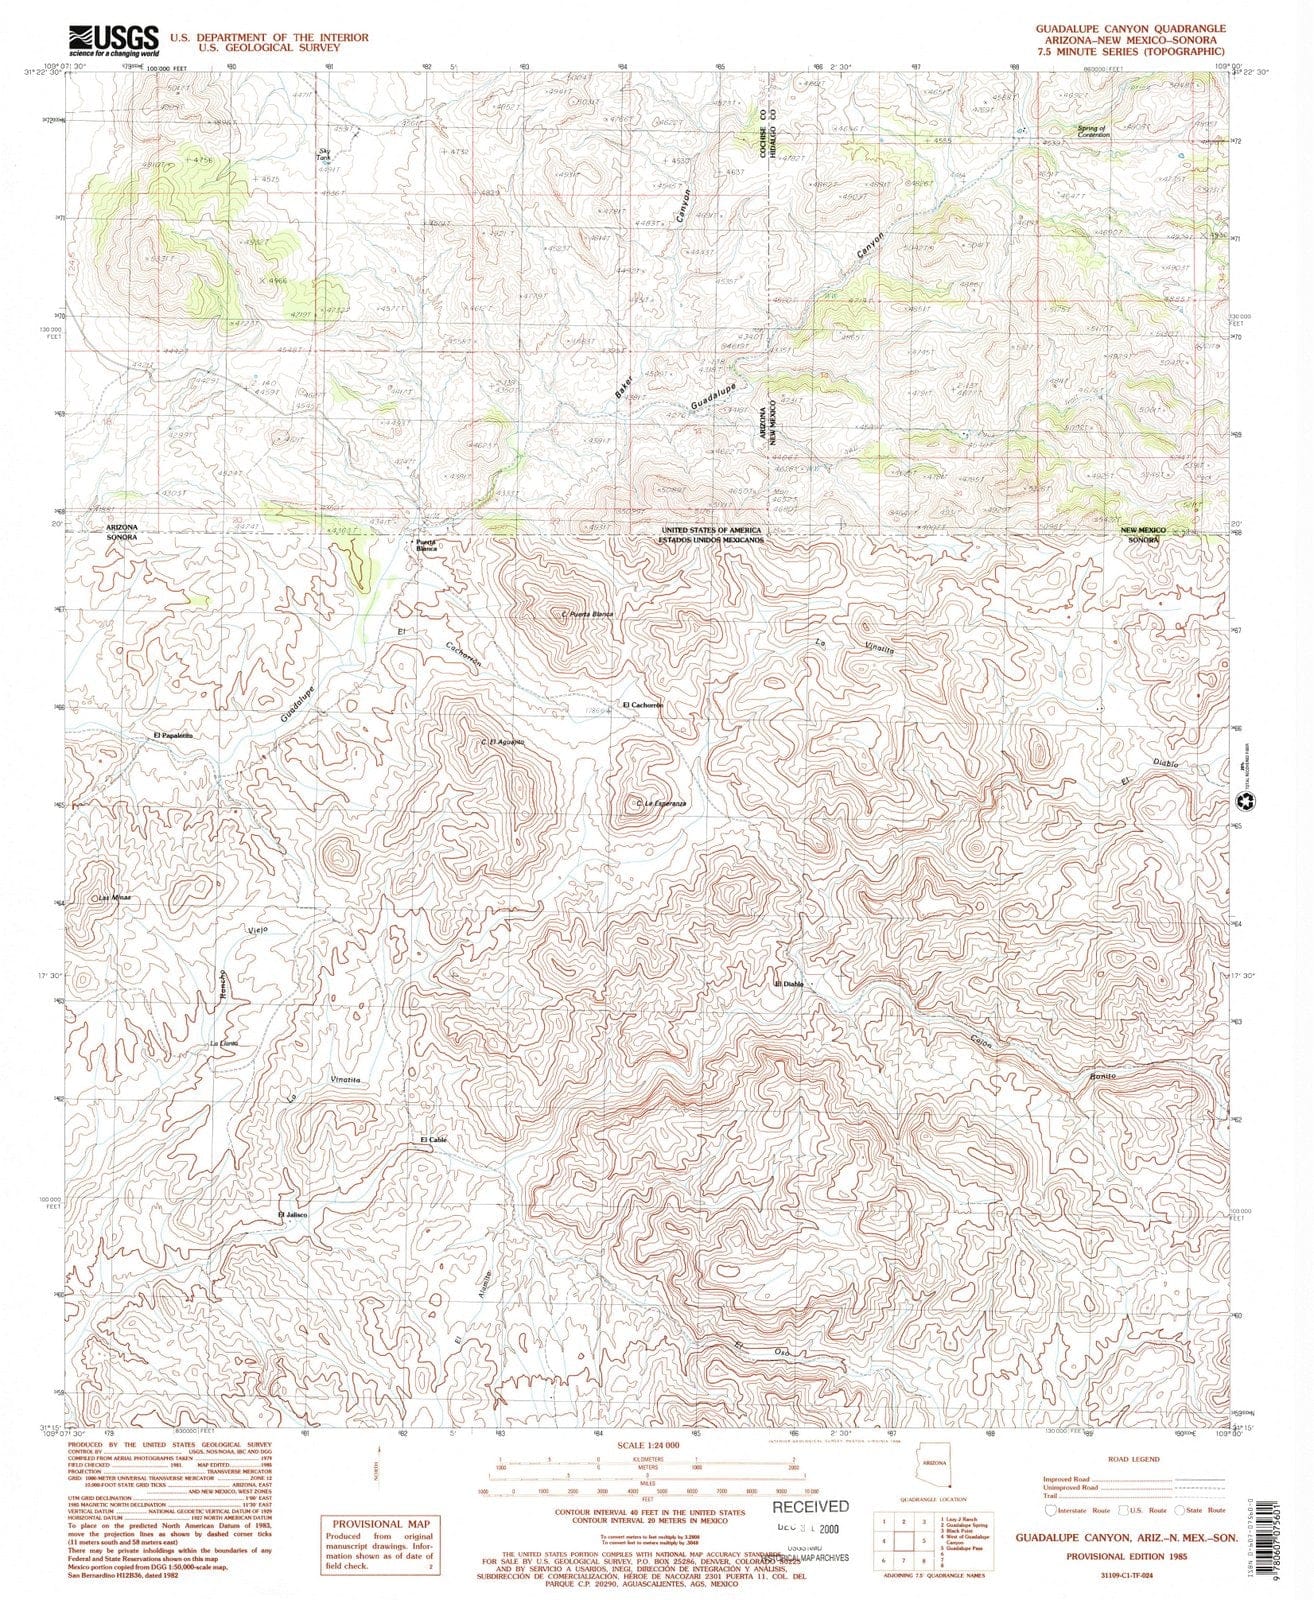 1985 Guadalupe Canyon, AZ - Arizona - USGS Topographic Map